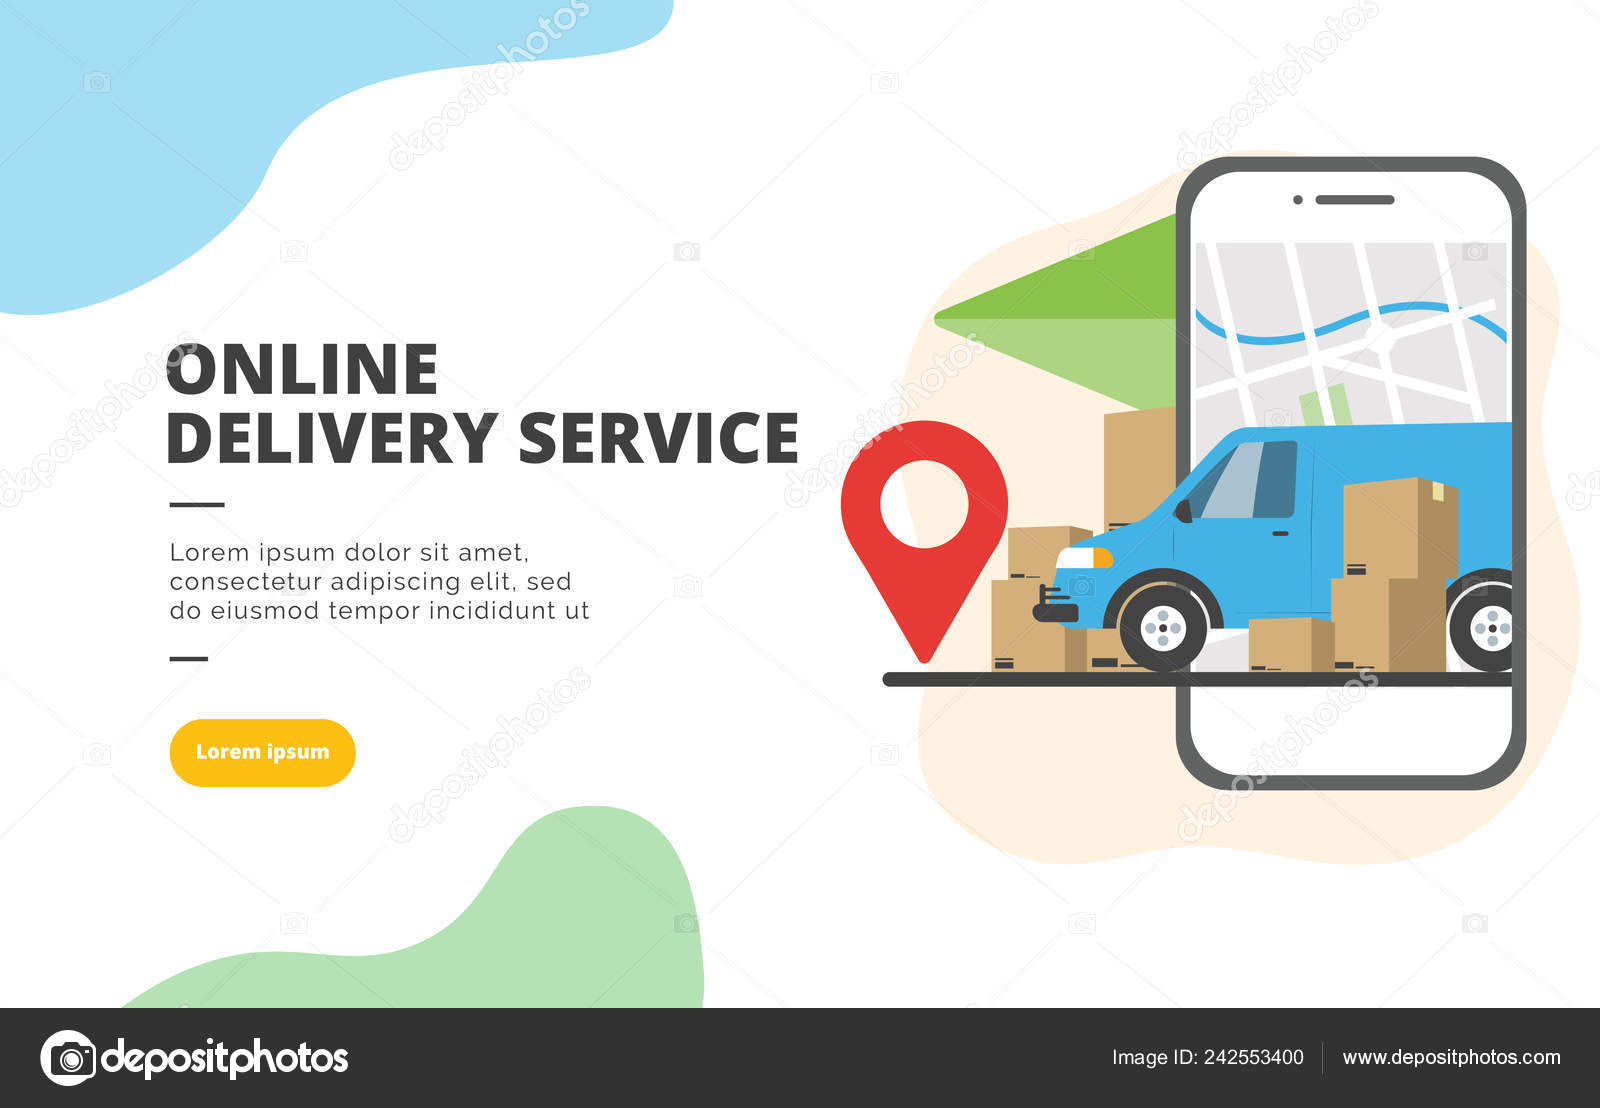 https://st4.depositphotos.com/2954247/24255/v/1600/depositphotos_242553400-stock-illustration-online-delivery-service-flat-design.jpg